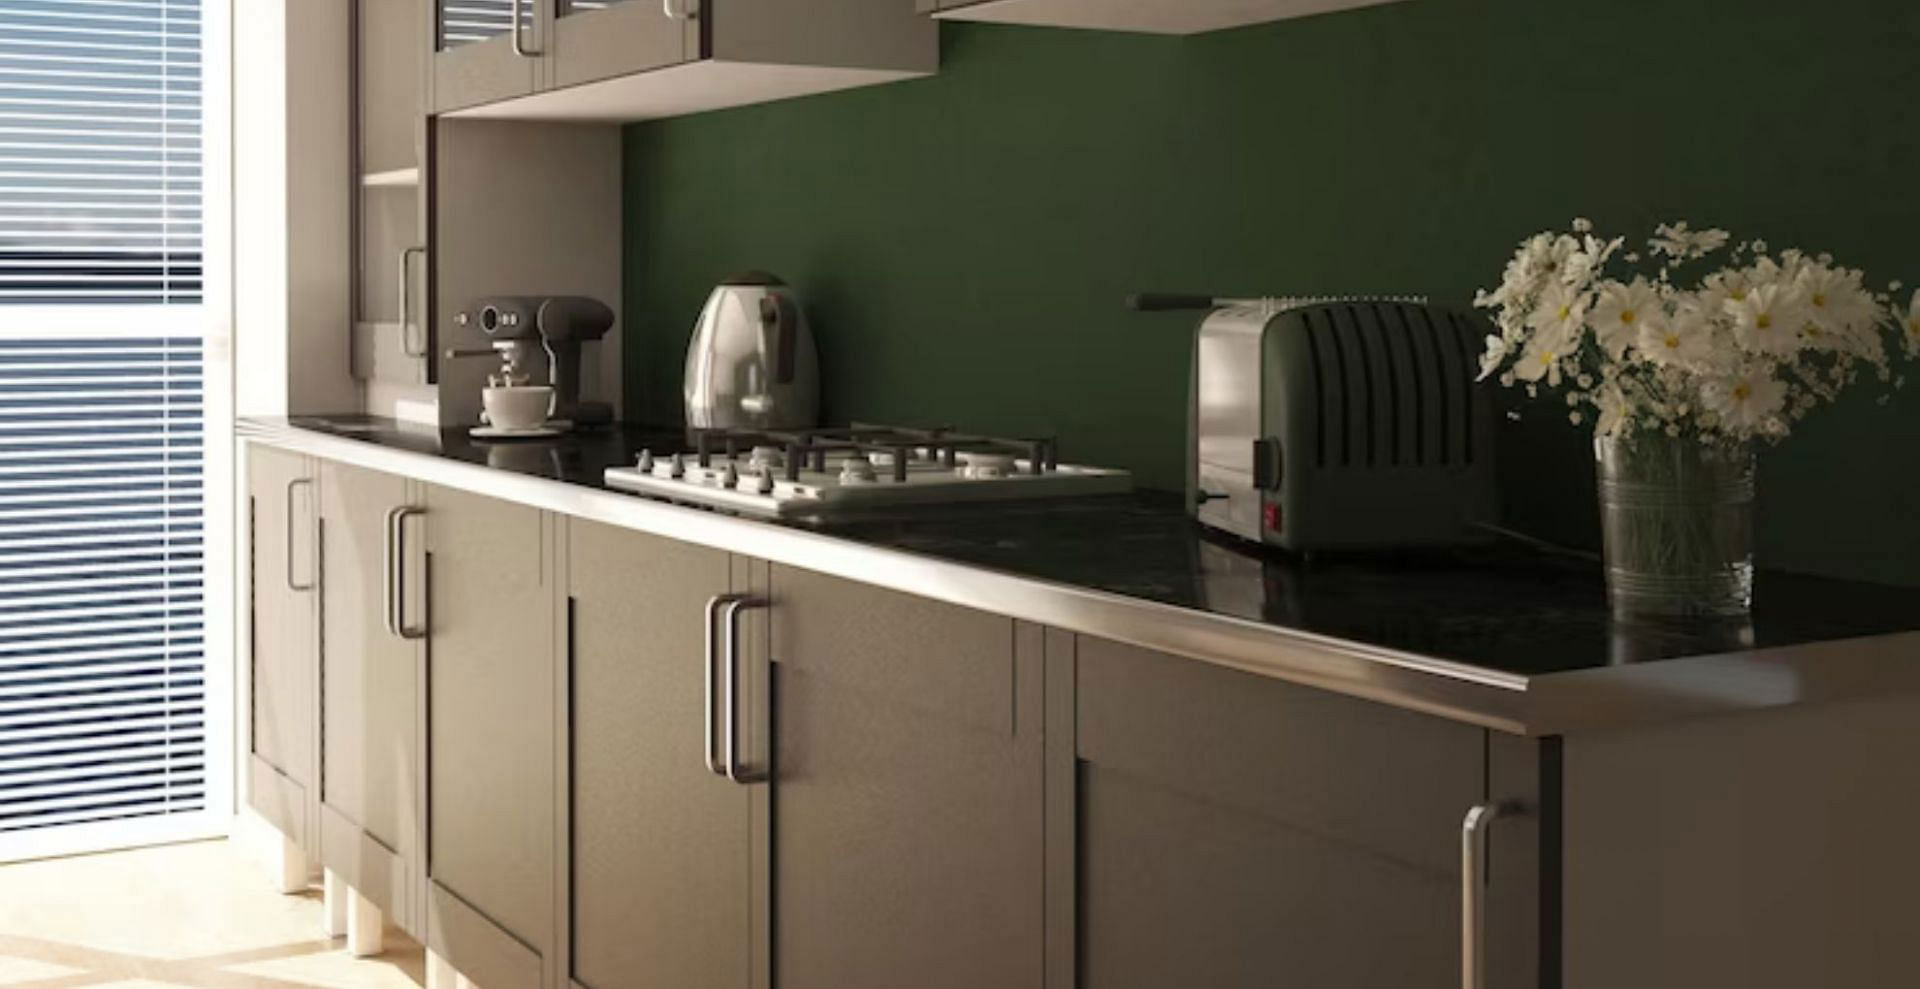 11 Best kitchen decor ideas to utilize the space